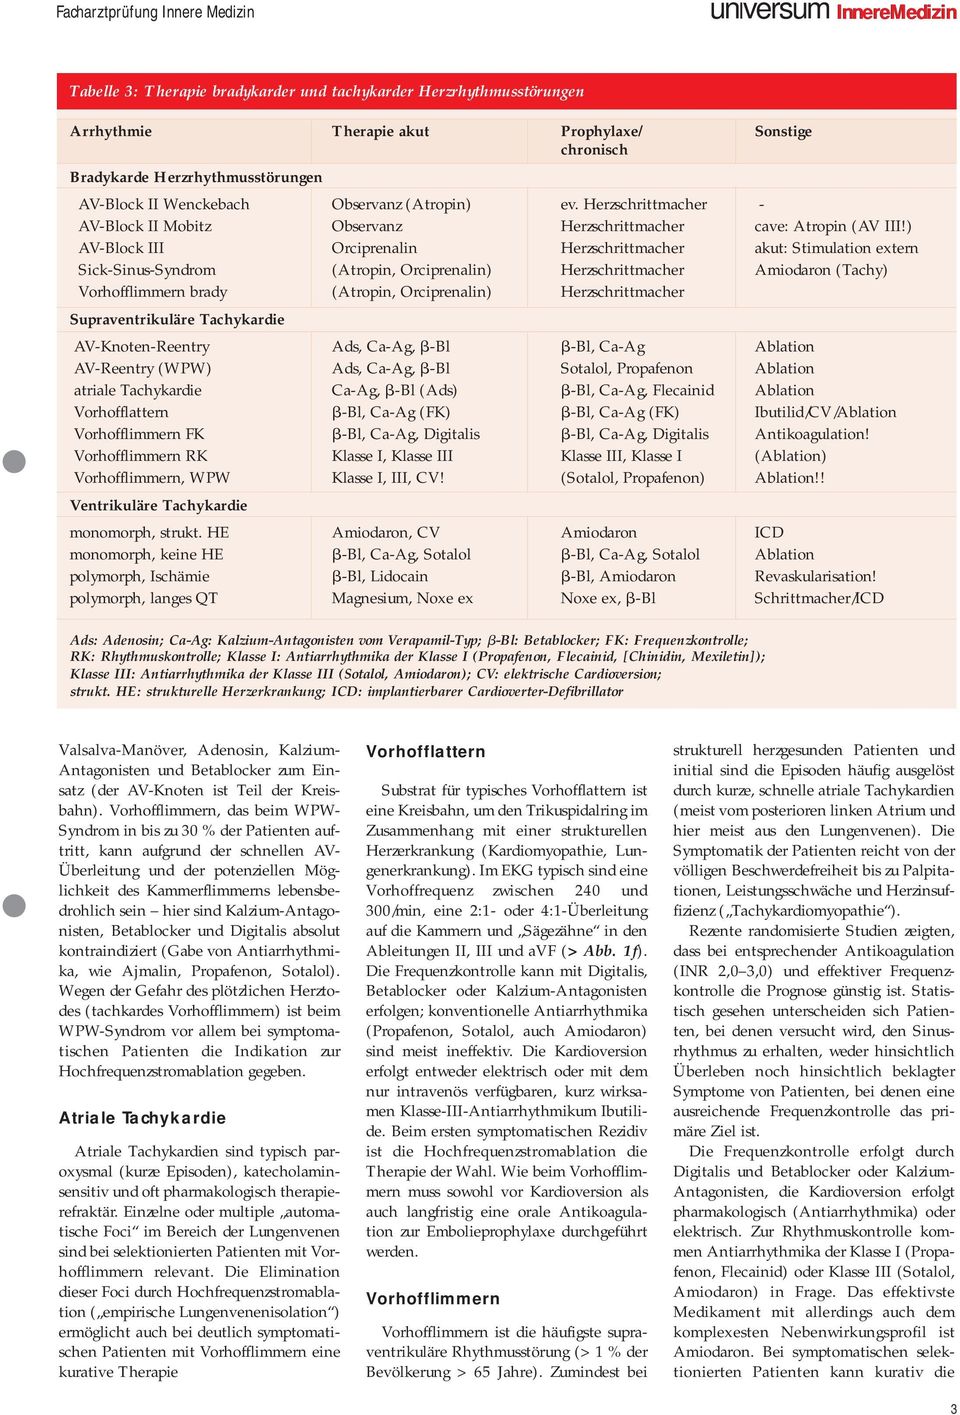 ) AV-Block III Orciprenalin Herzschrittmacher akut: Stimulation extern Sick-Sinus-Syndrom (Atropin, Orciprenalin) Herzschrittmacher Amiodaron (Tachy) Vorhofflimmern brady (Atropin, Orciprenalin)